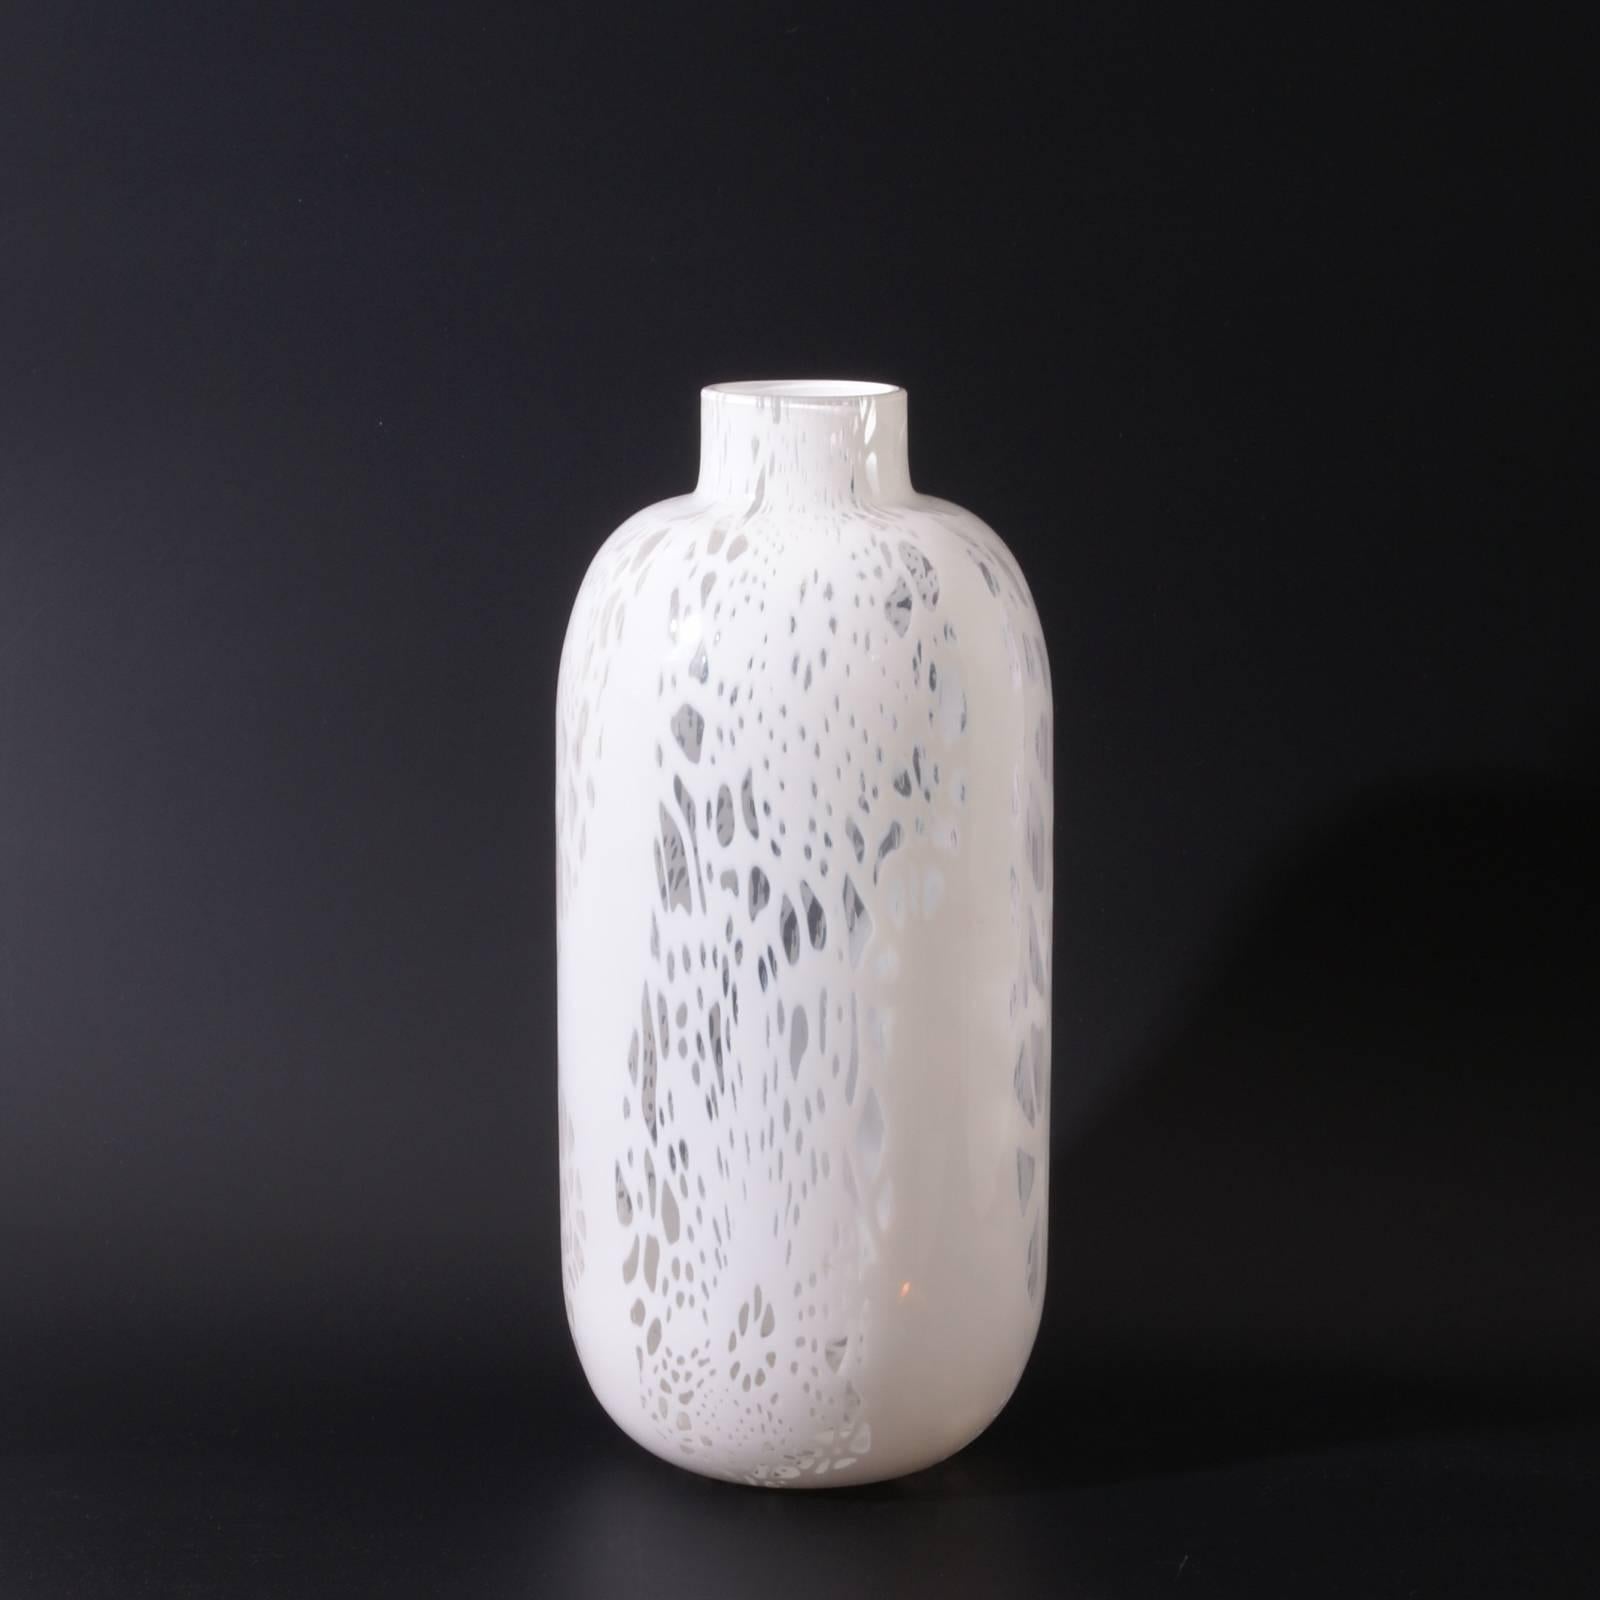 Lattimo glass vase with 